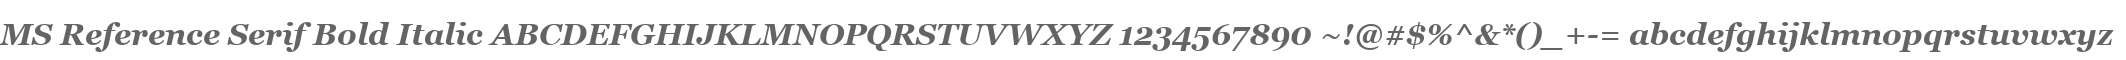 MS Reference Serif Bold Italic